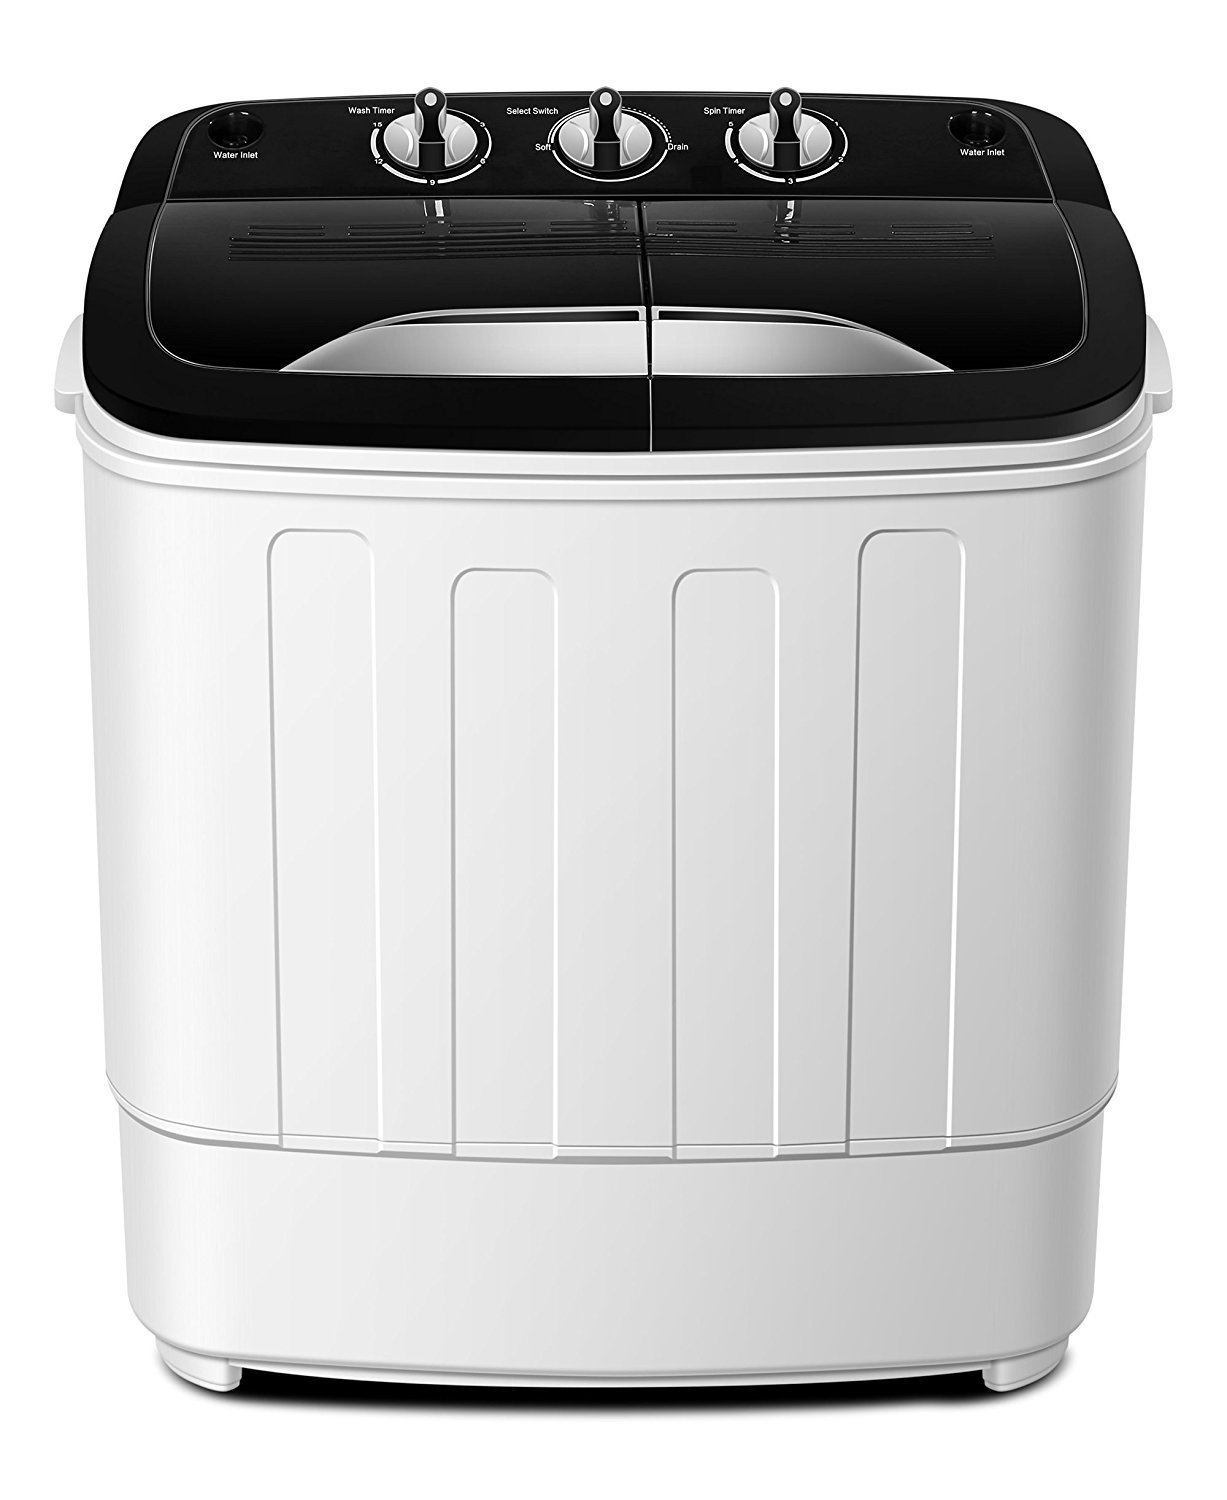 Think Gizmos 带排水泵的便携式洗衣机 - 双桶洗衣机，带 7.9 磅洗涤室和 4.4 磅旋转循环室